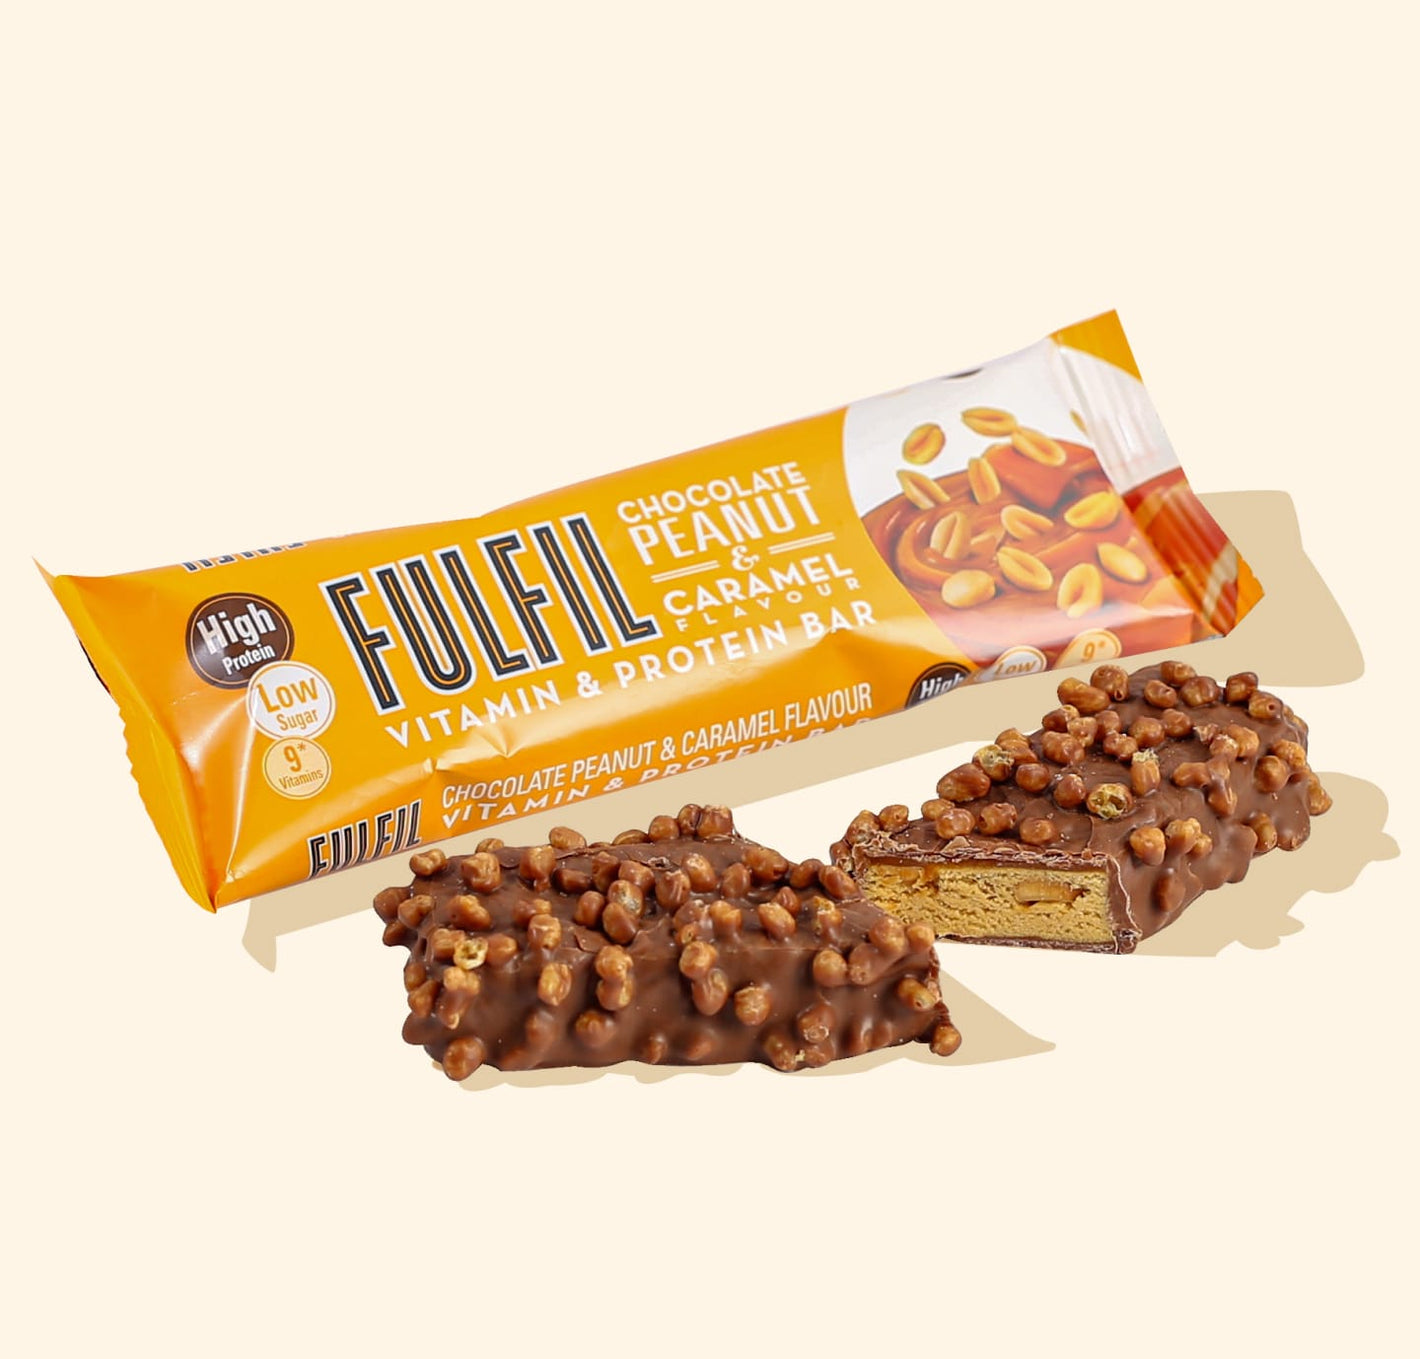 Fulfil Vitamin & Protein Bar - Peanut & Caramel